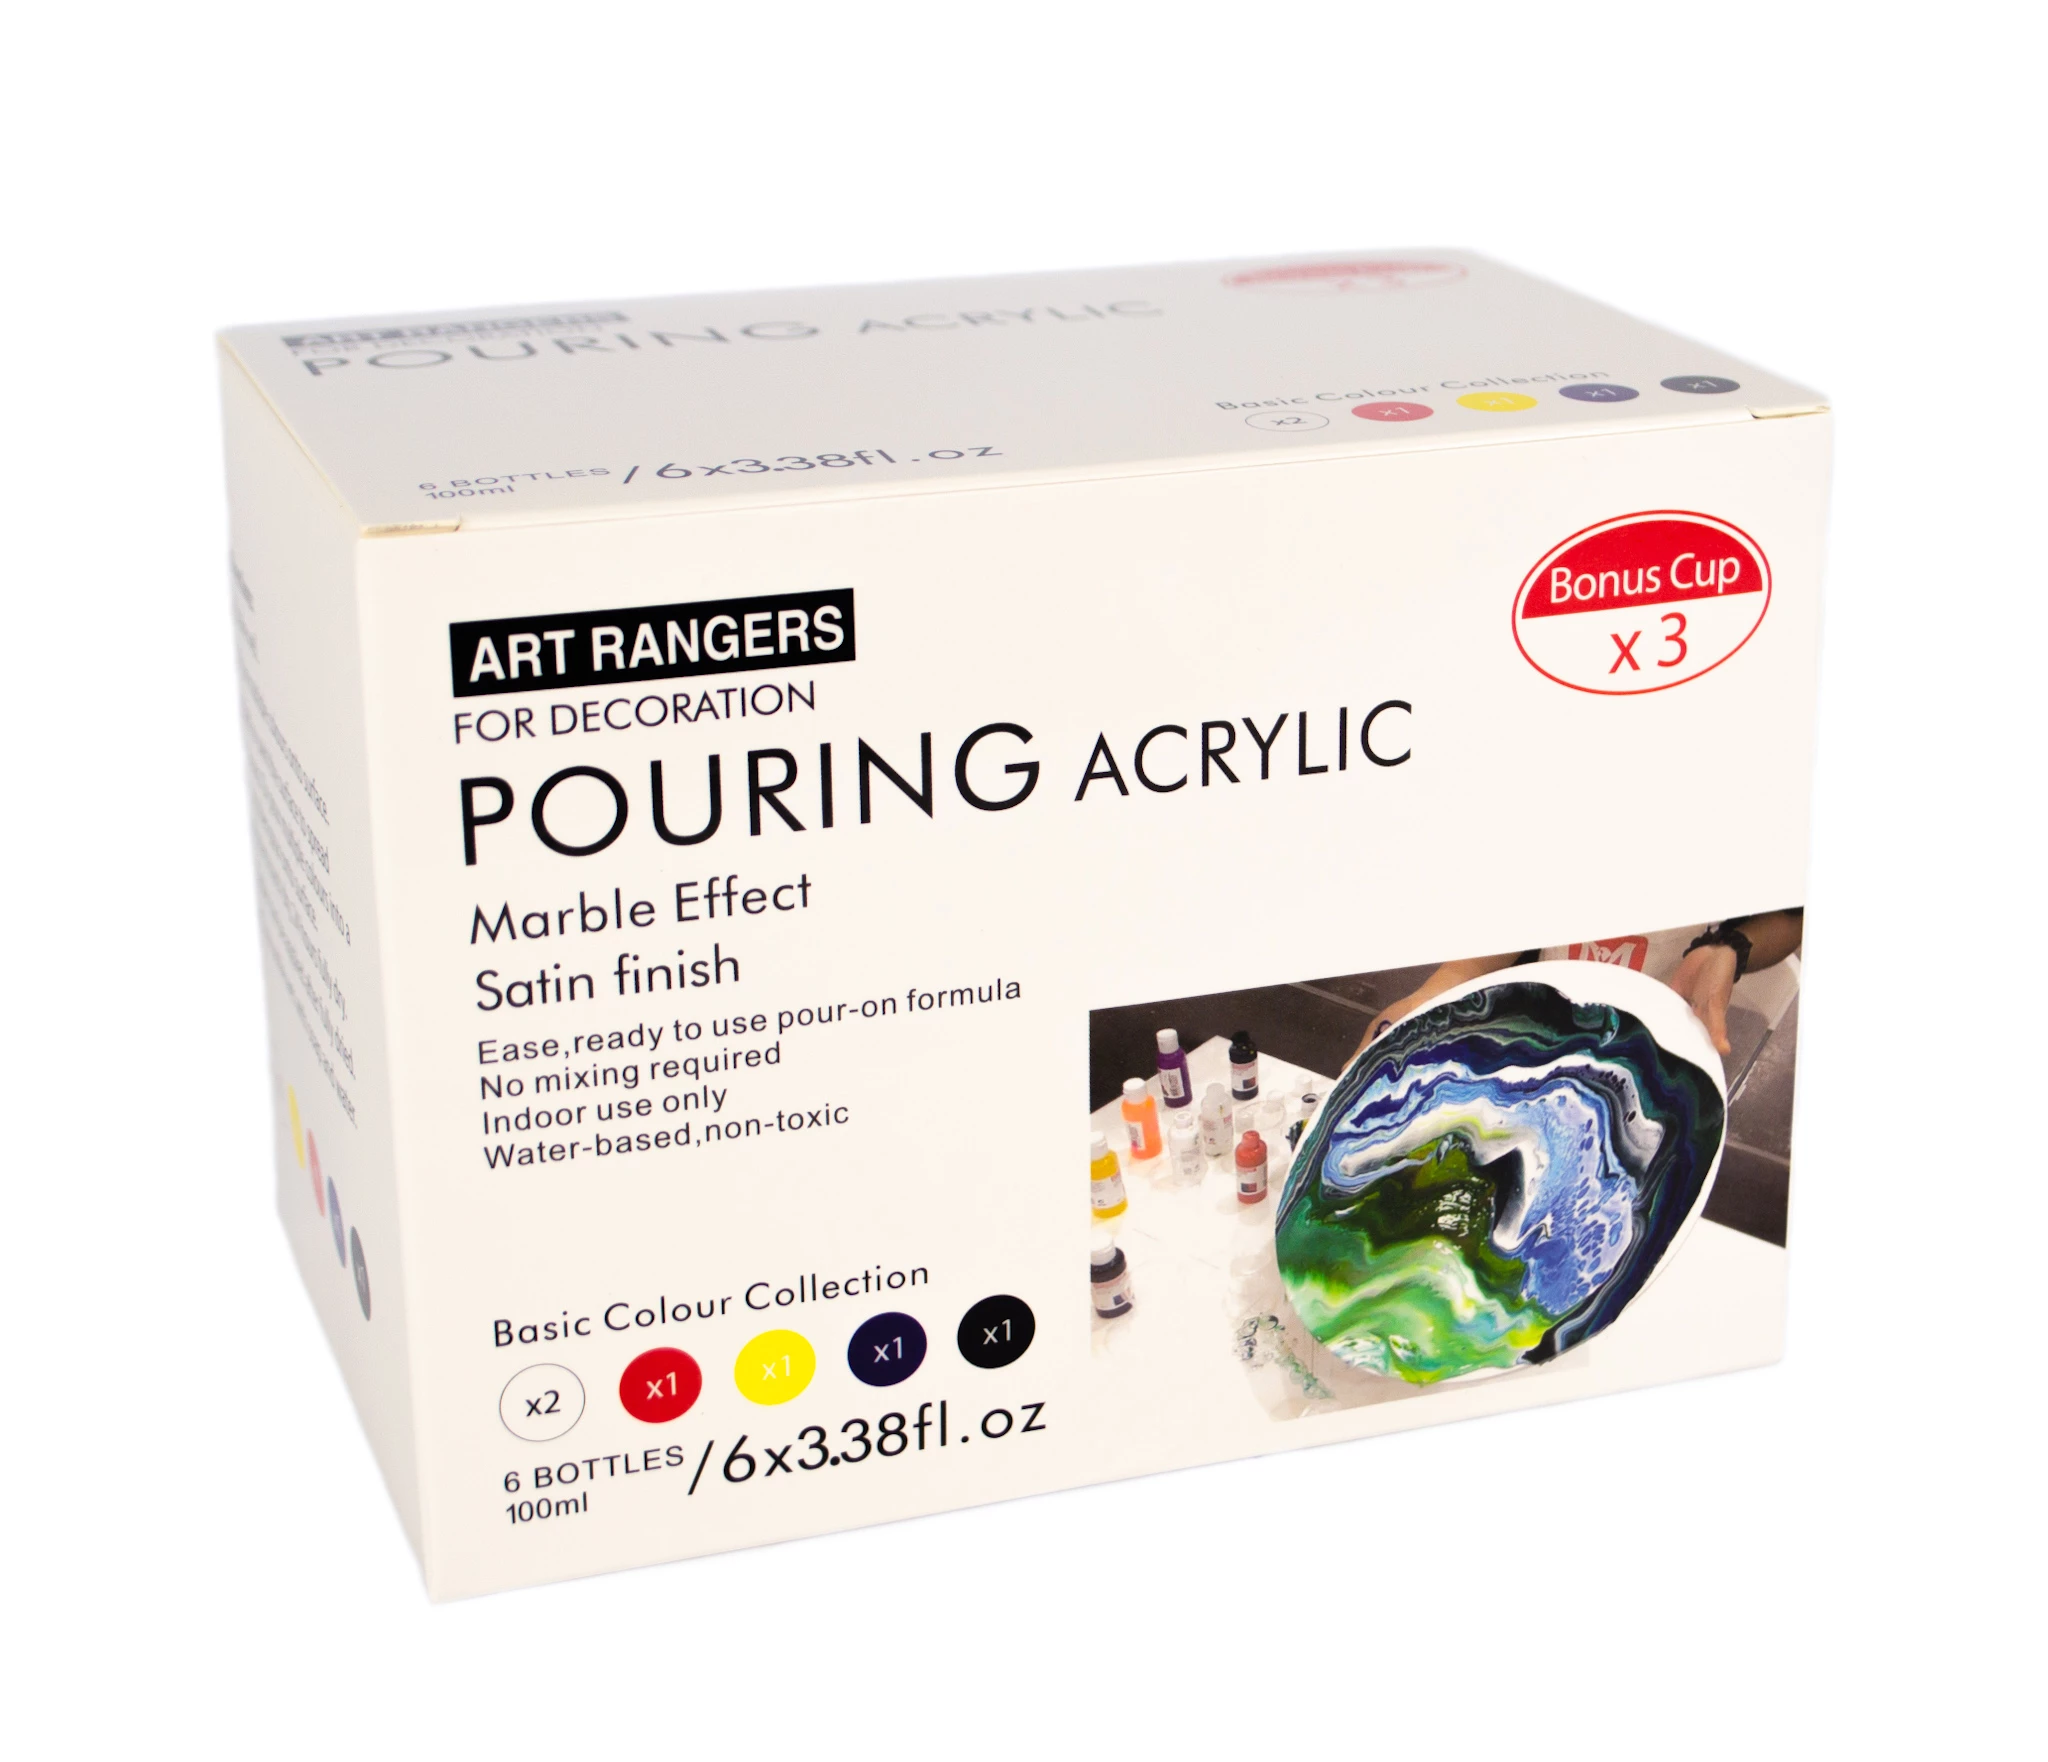 ART RANGERS POURING ACRYLIC ZESTAW 6 x 100 ml PODSTAWOWE